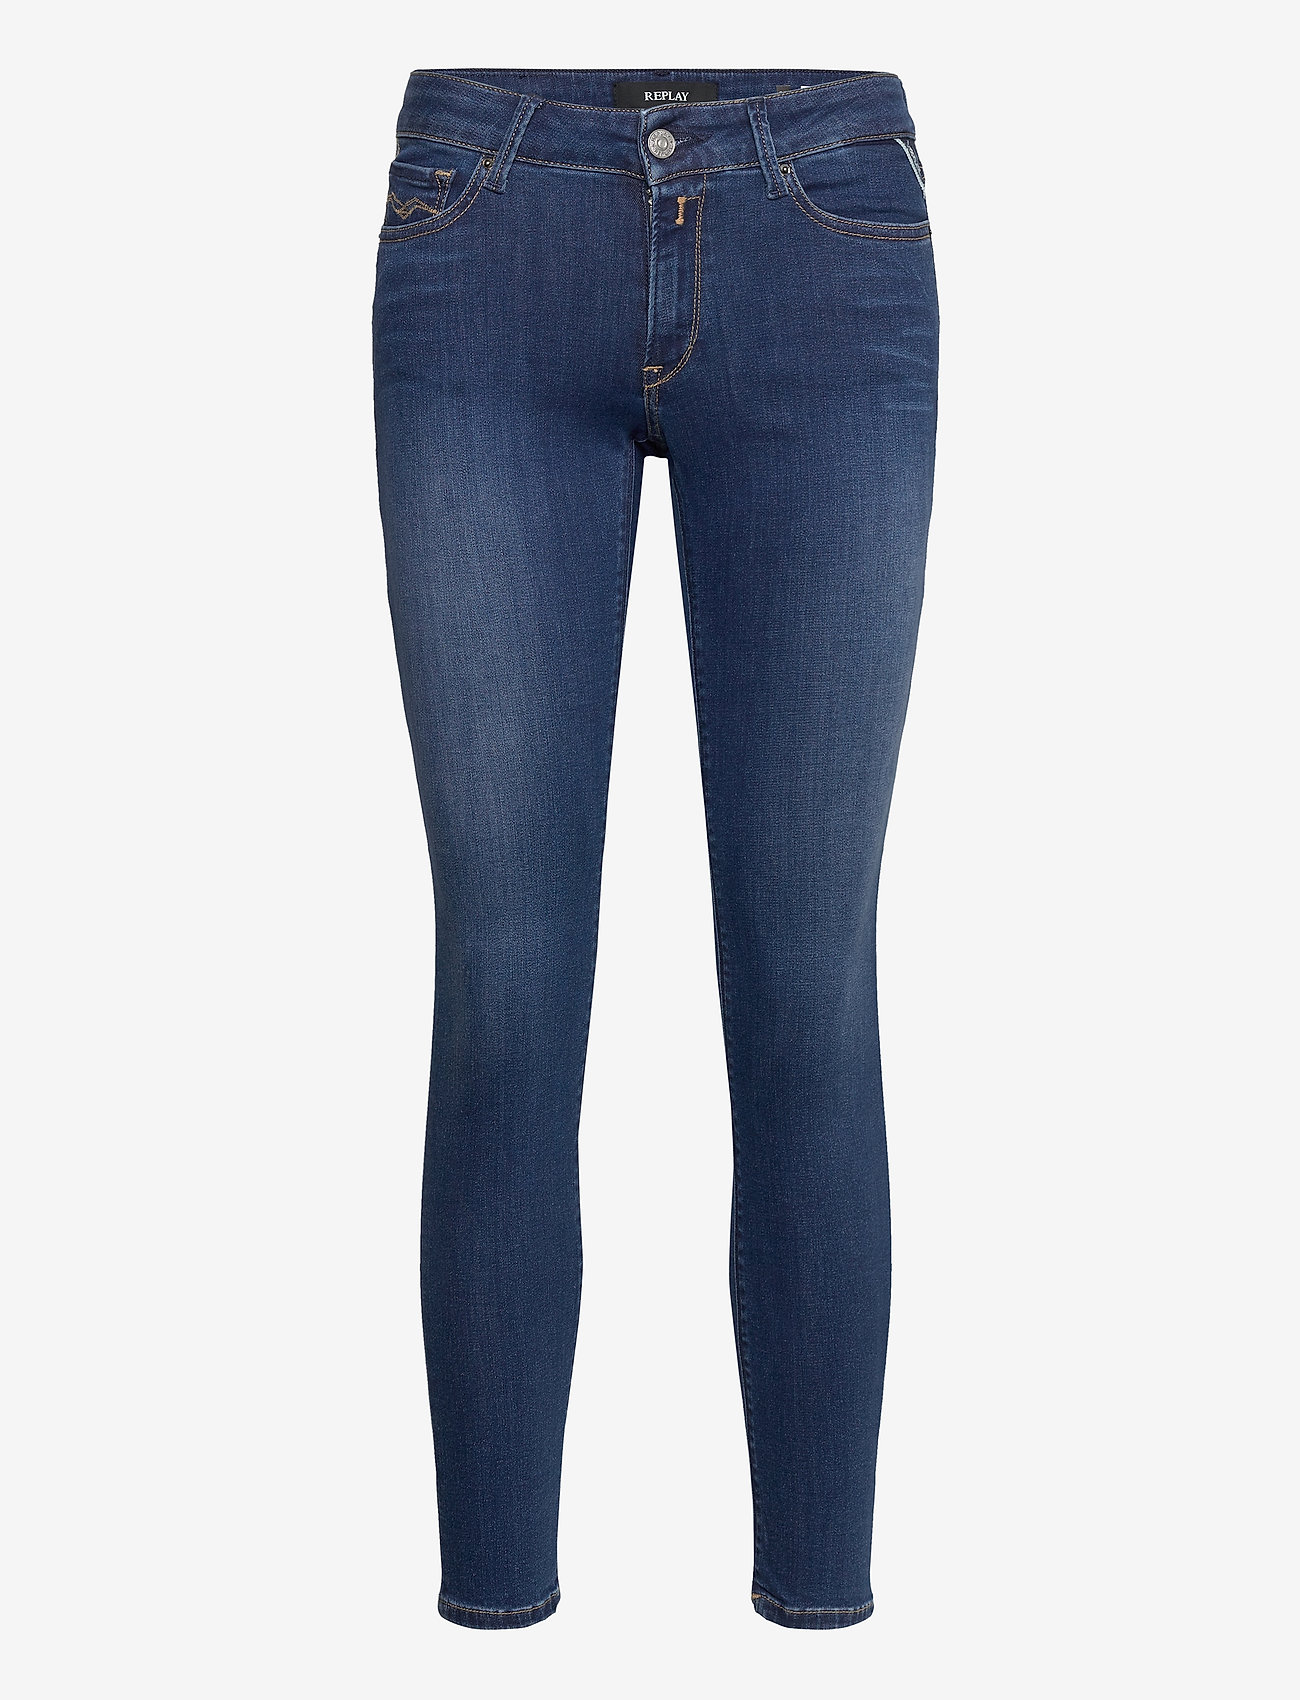 Replay - NEW LUZ Trousers 99 Denim - dżinsy skinny fit - medium blue - 0